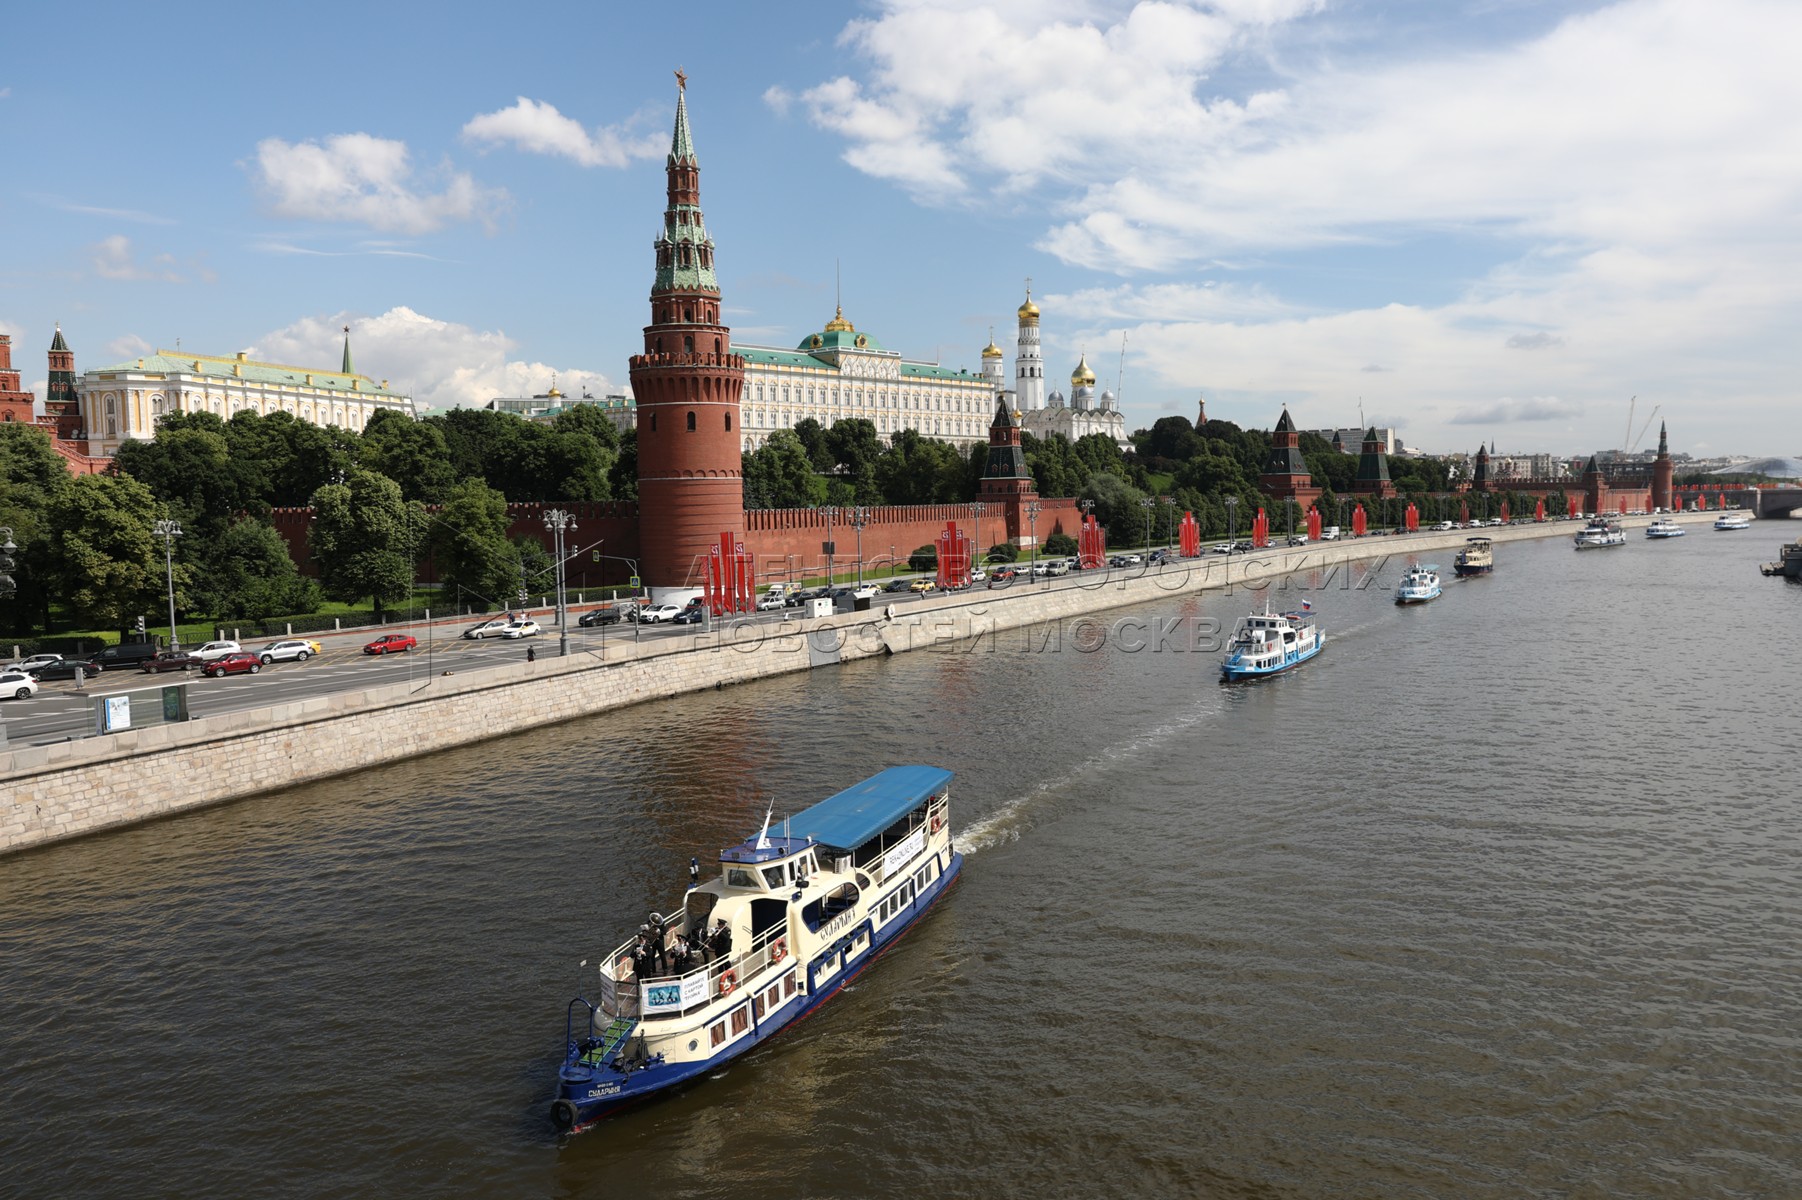 Речные москва река. Москва река в Москве. Навигация по Москве реке 2021. Москва расположена на реке Москва. Парад теплоходов.